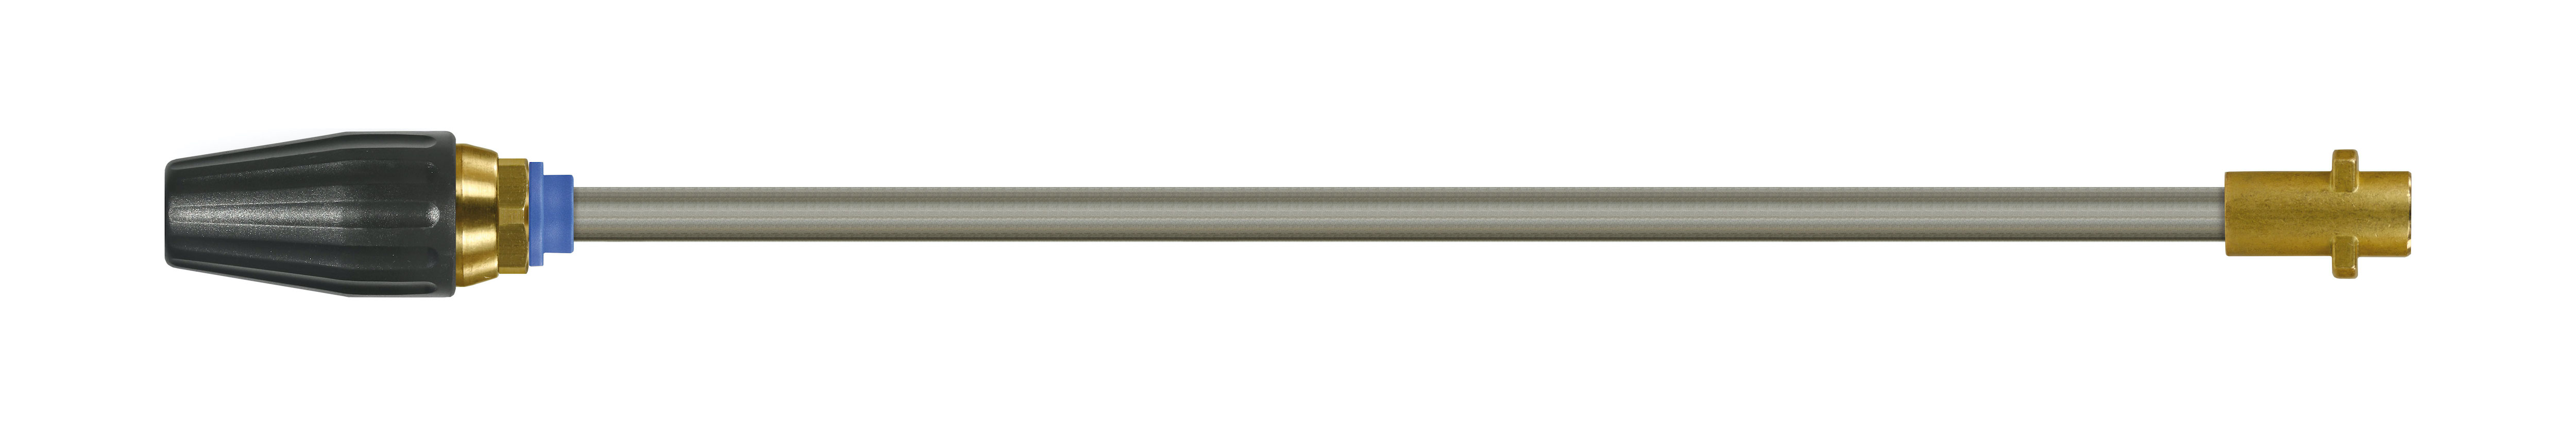 Rotabuse céramique avec lance 430mm, 100-250 bar, Calibre 045.